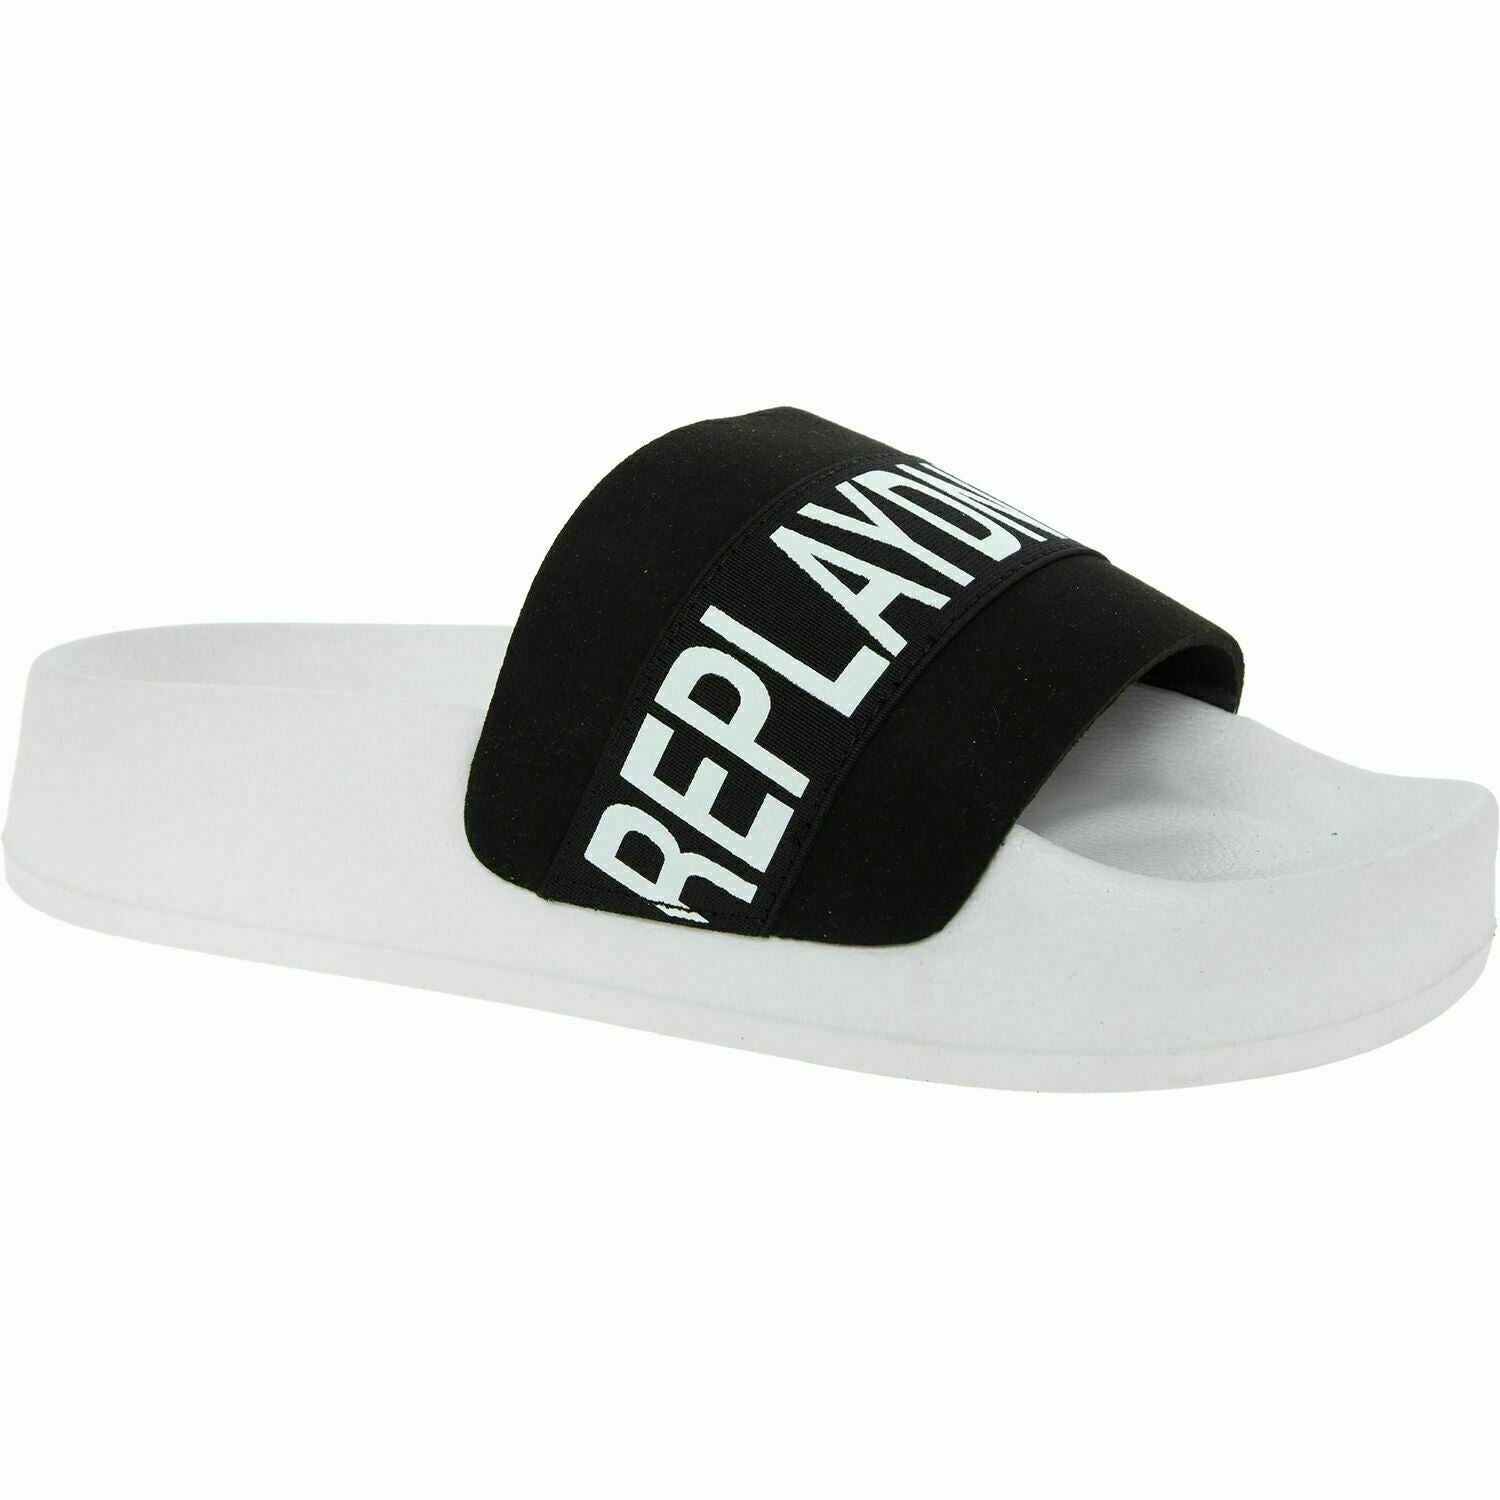 REPLAY Women's Black Logo Sliders, Sandals, size UK 4 / EU 37